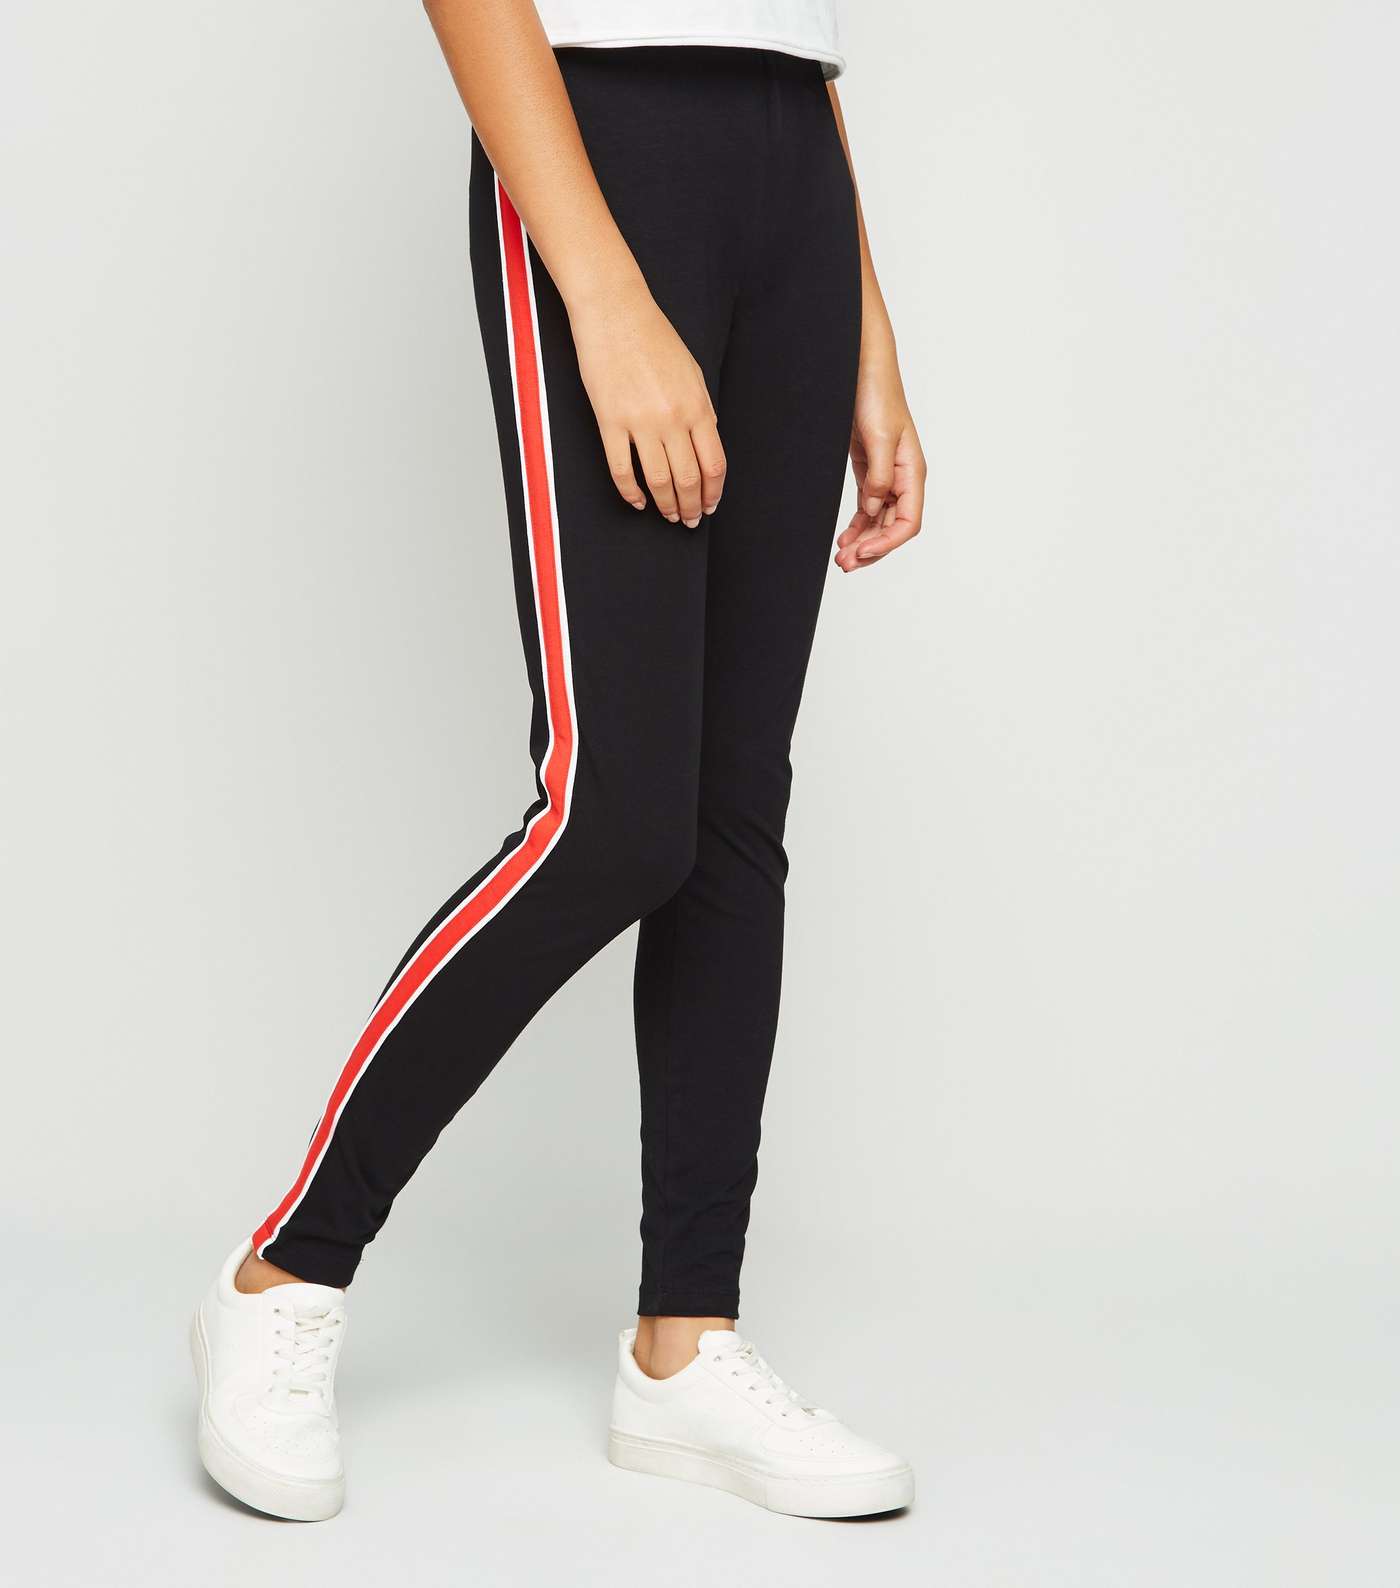 https://media2.newlookassets.com/i/newlook/633732969M1/girls/clothing/leggings/girls-red-side-stripe-leggings.jpg?strip=true&w=1400&qlt=60&fmt=jpeg